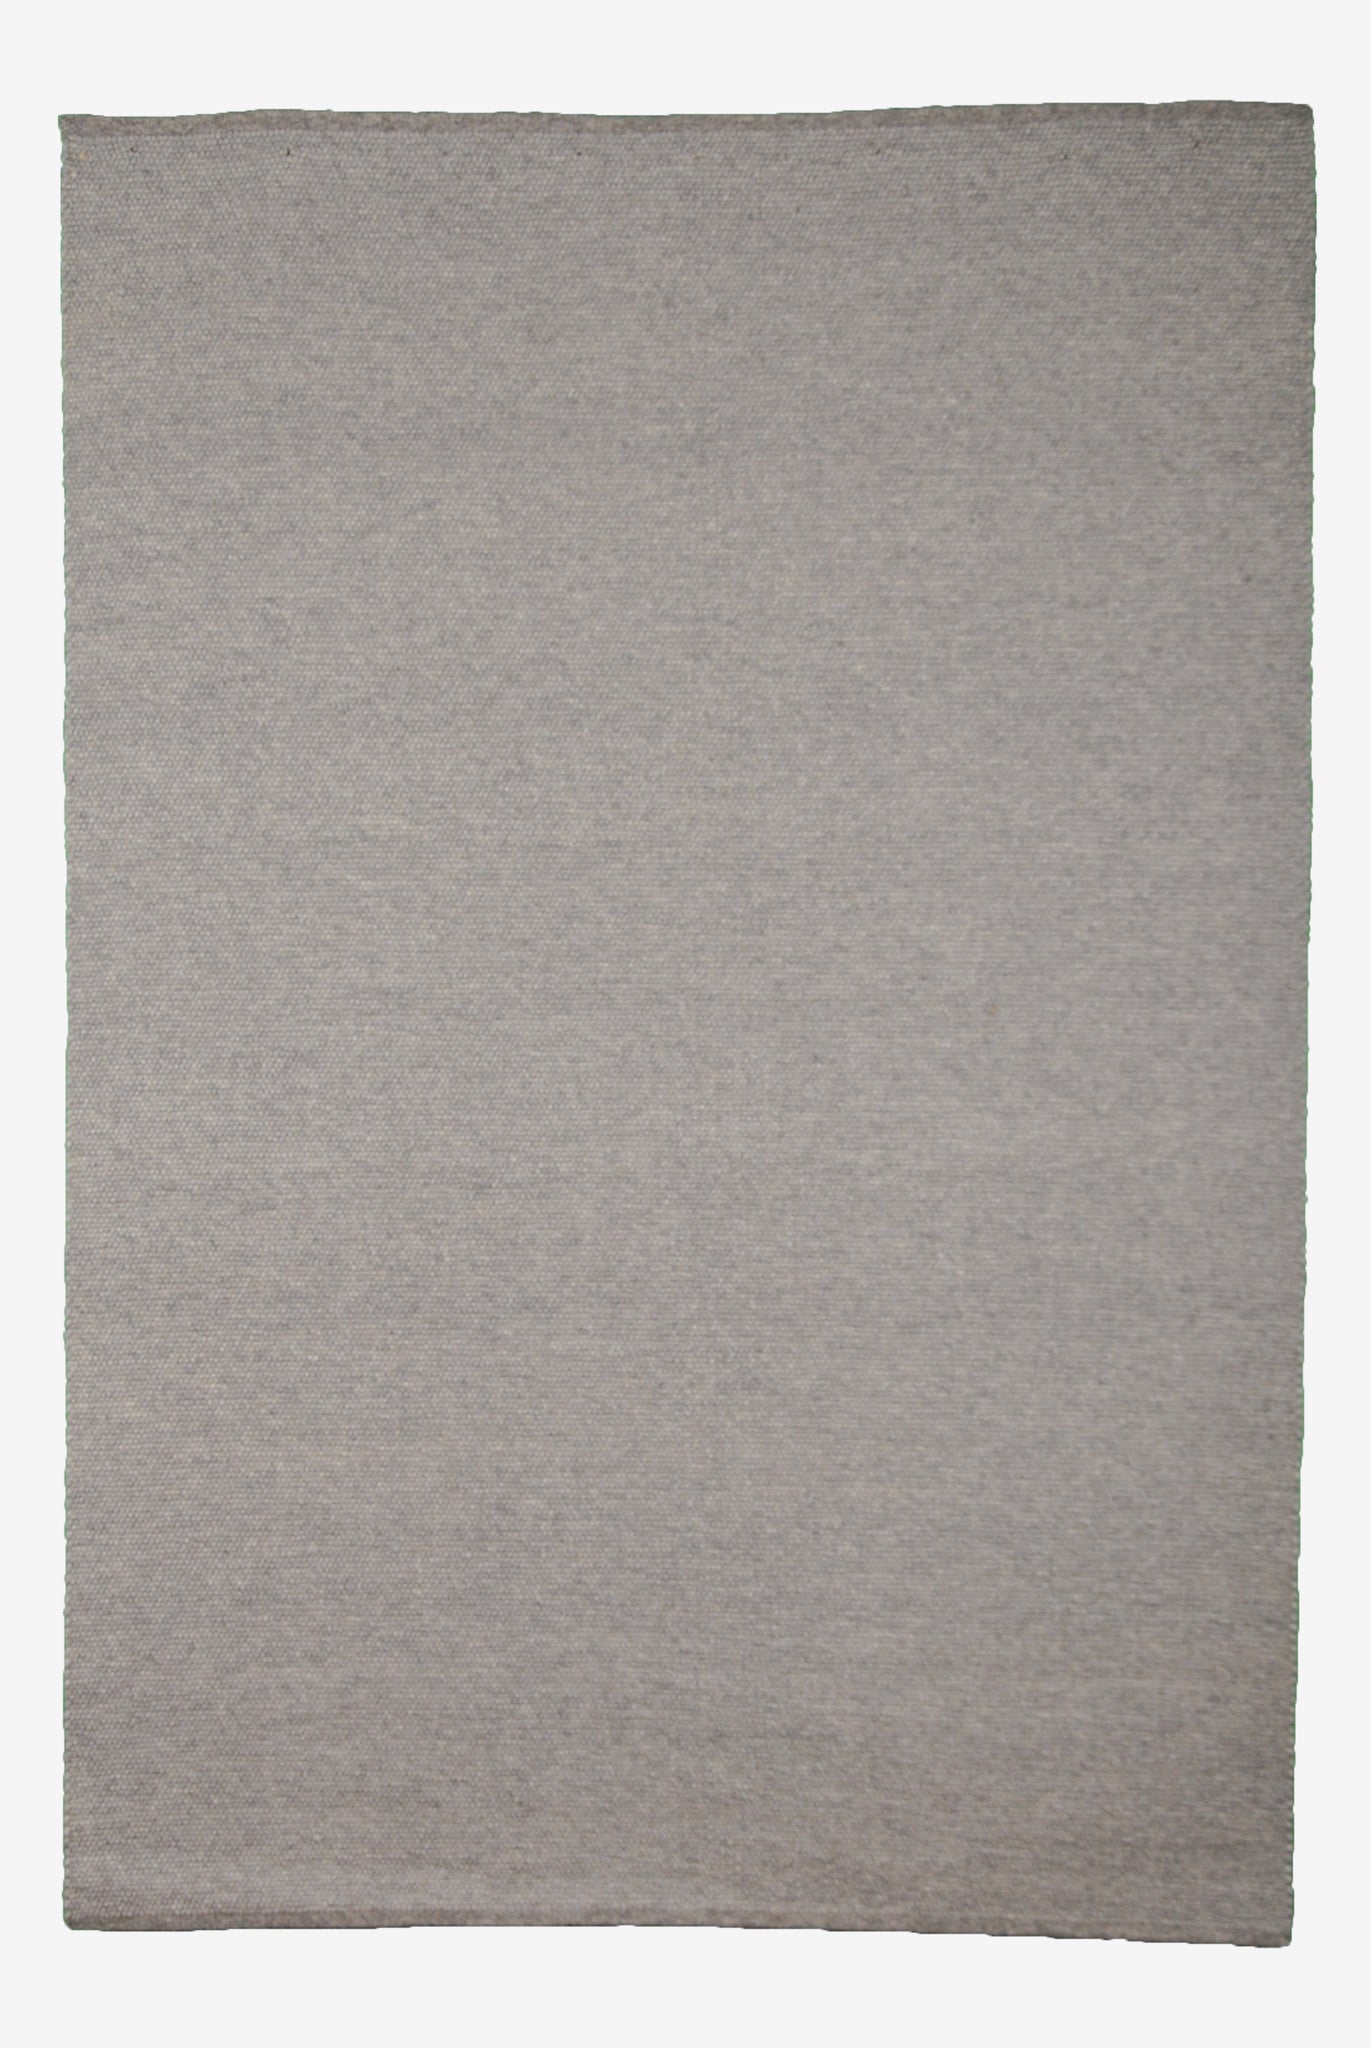 Handwebteppich Olbia Uni 1821 - Grau - 140 x 200 cm